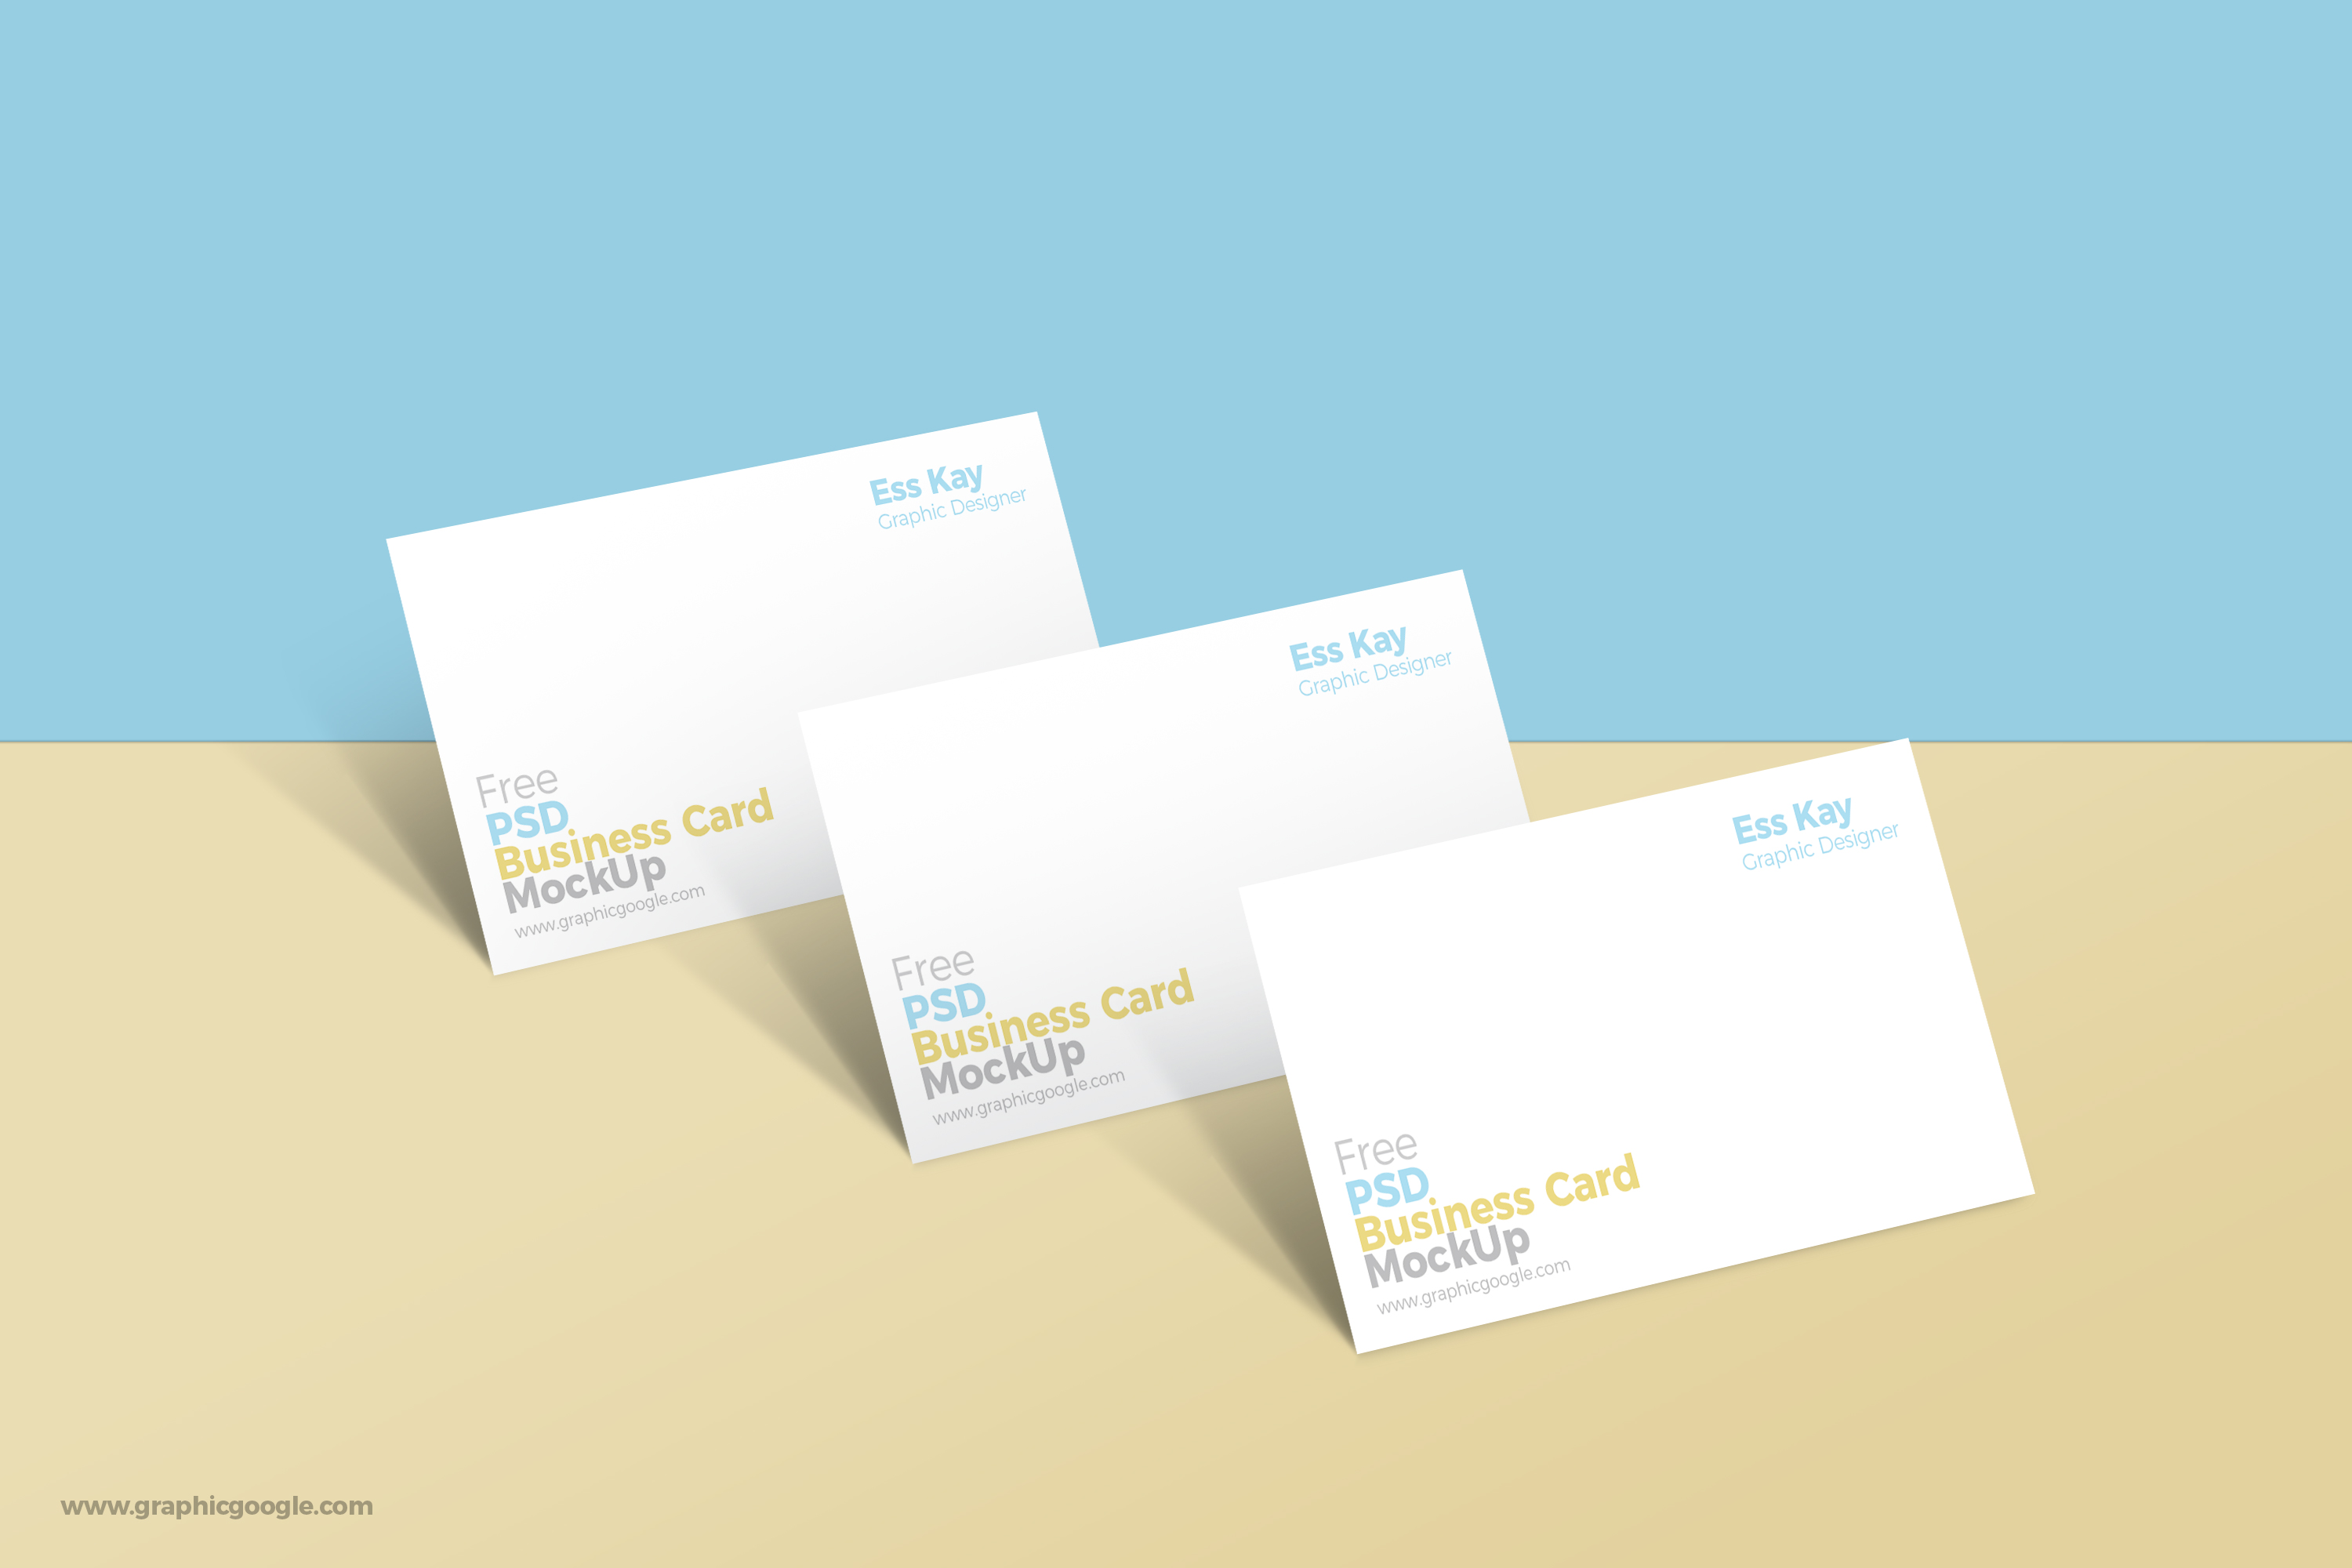 Free PSD Business Card MockUp - Engine Templates